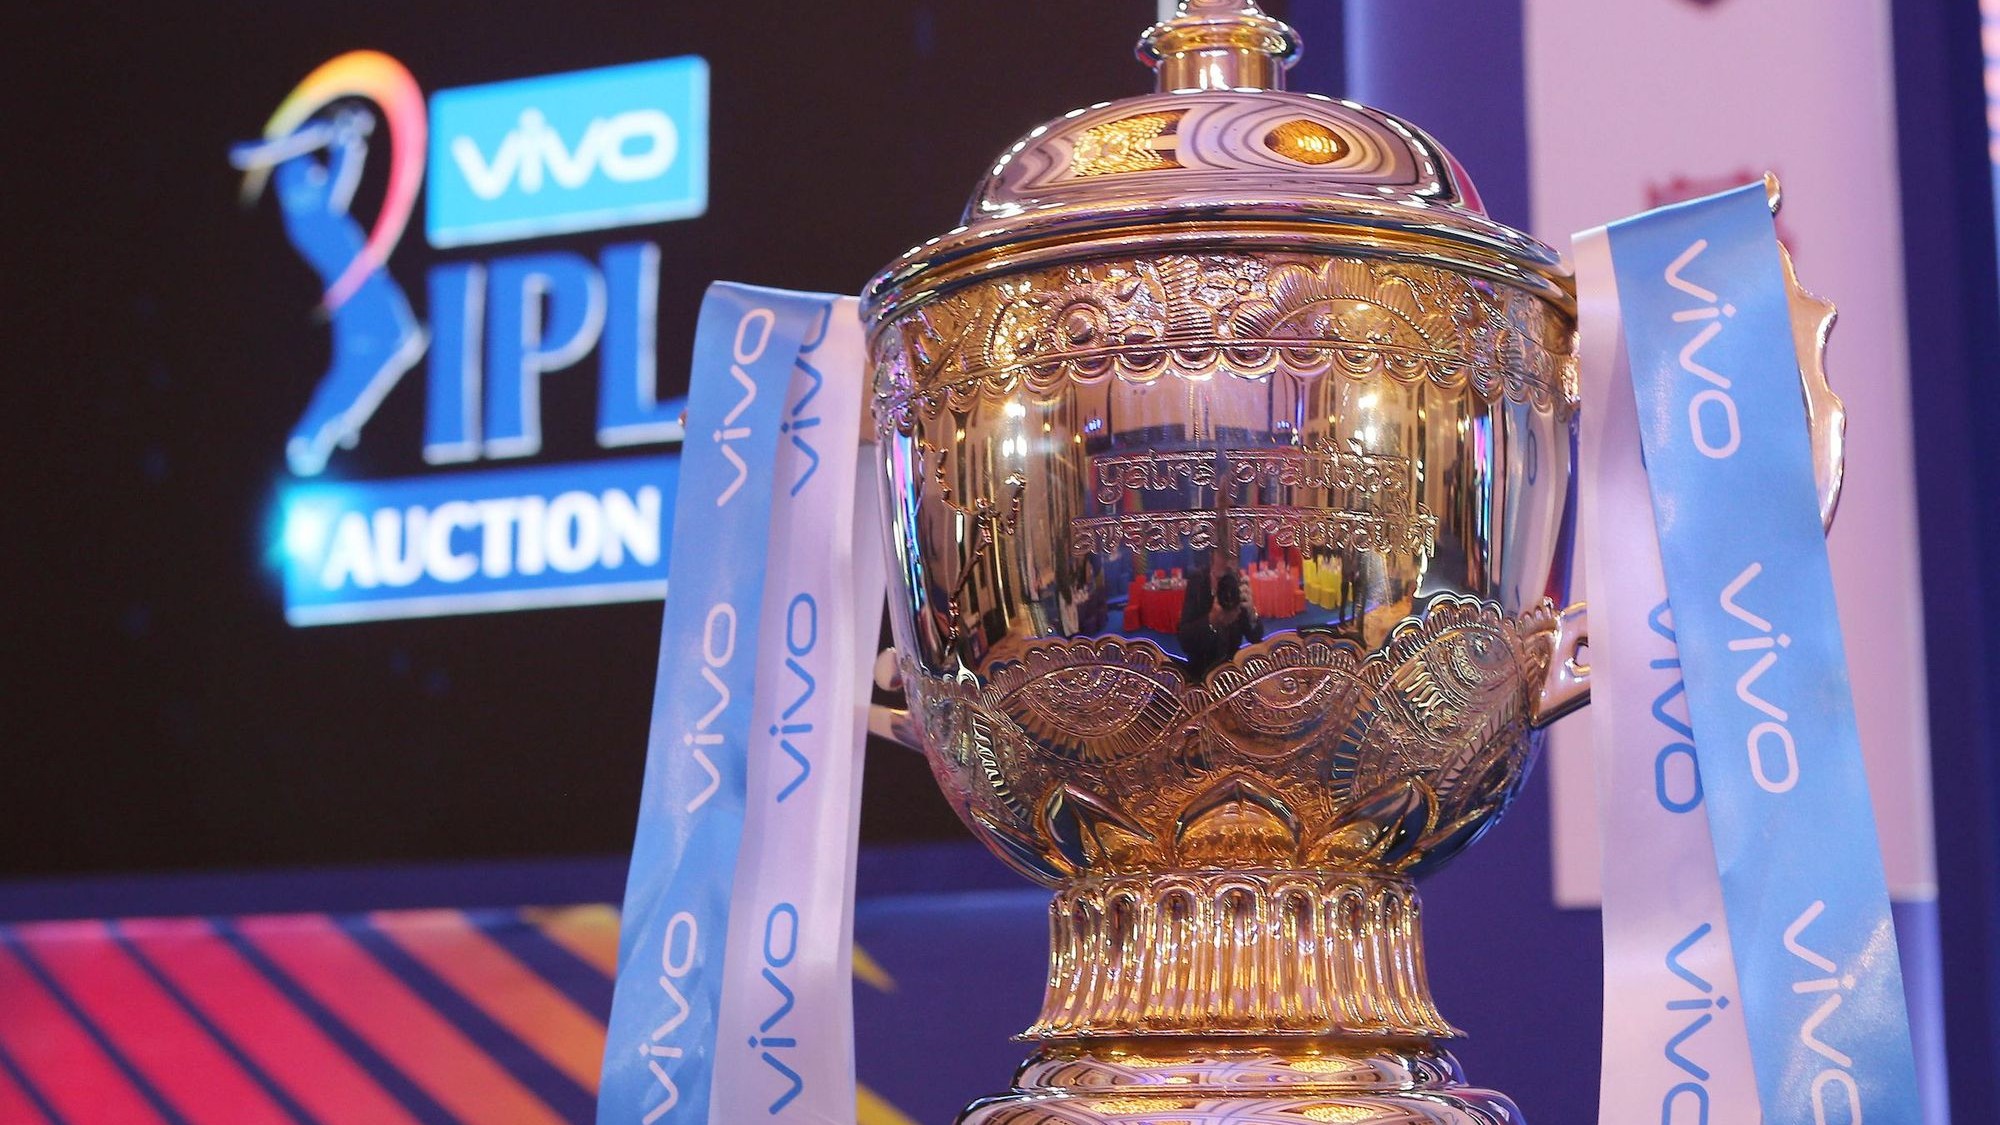 IPL 2020: IPL 13 may be postponed indefinitely due to extension in lockdown, as per report